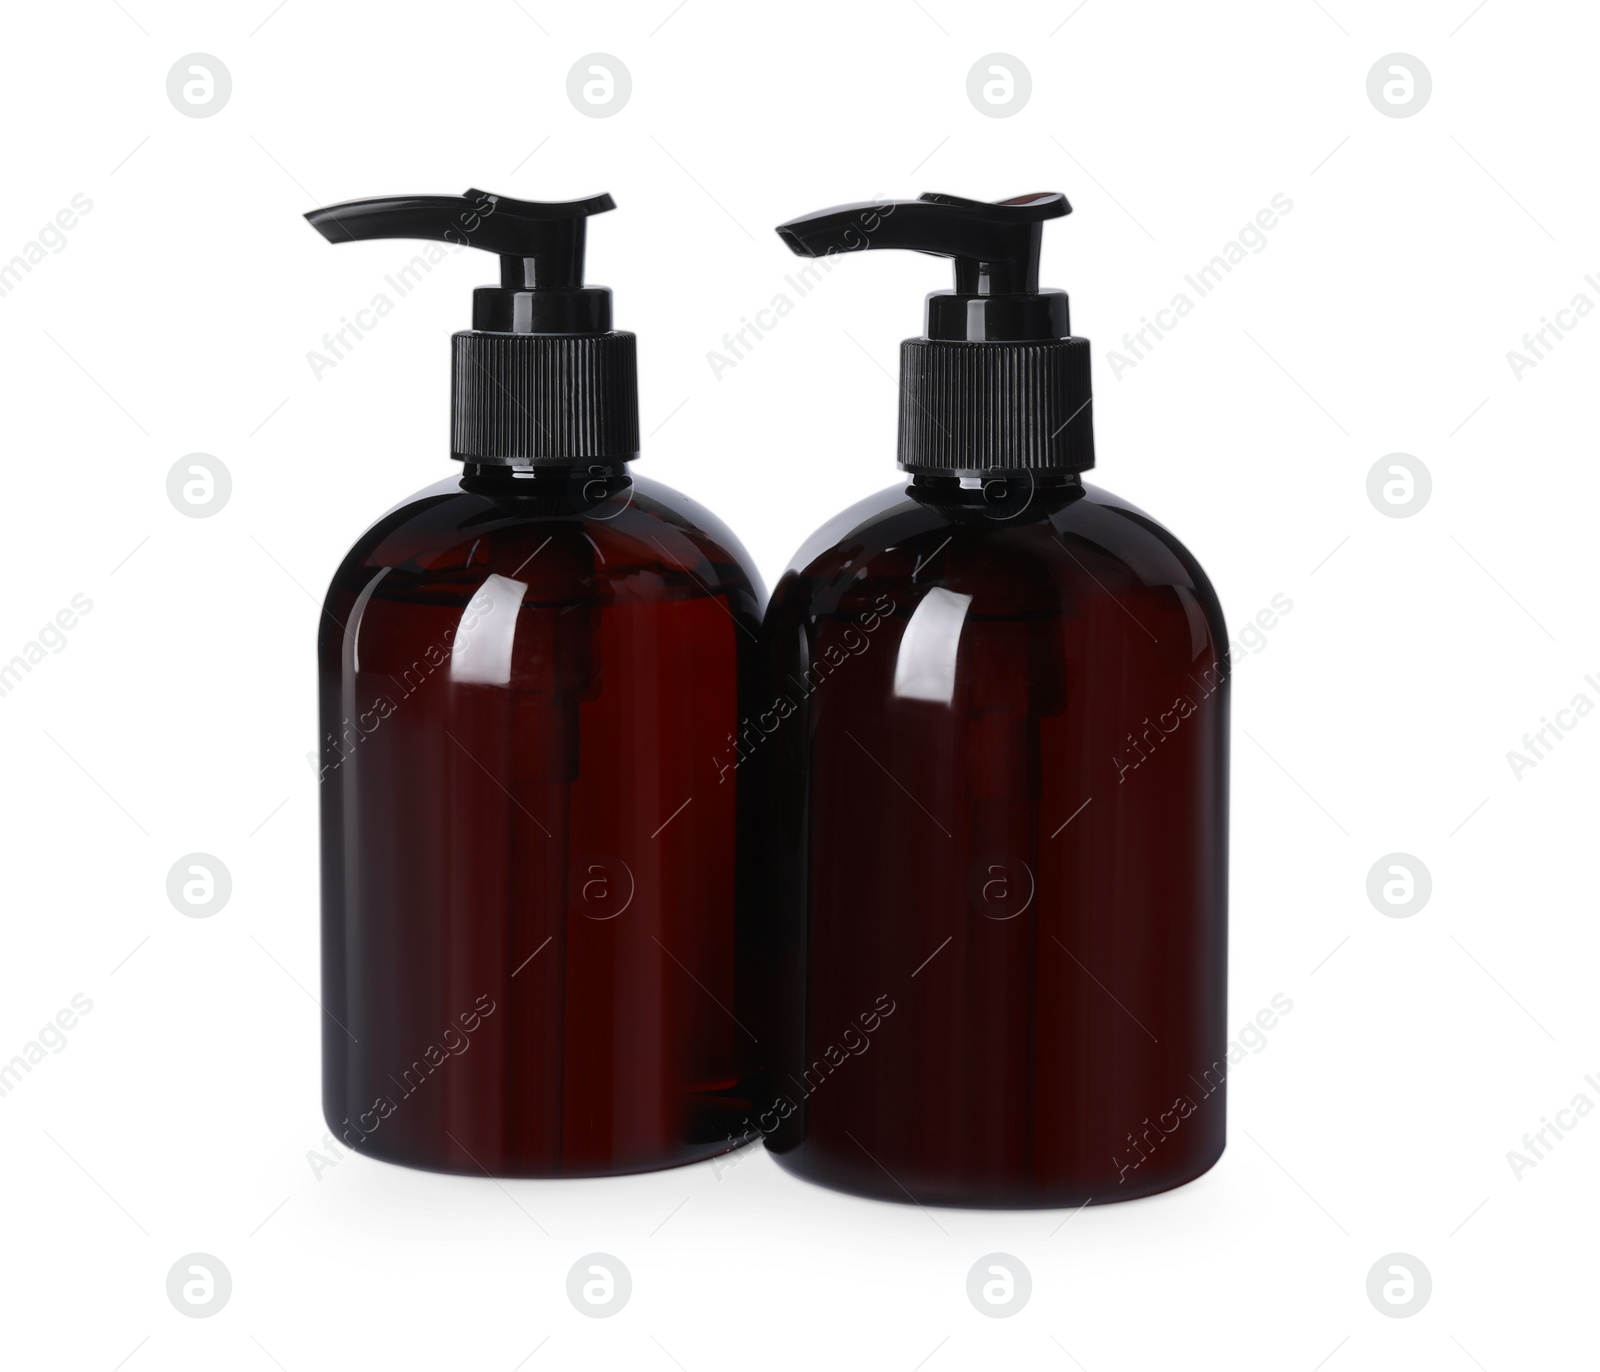 Photo of Two bottles of shampoo isolated on white